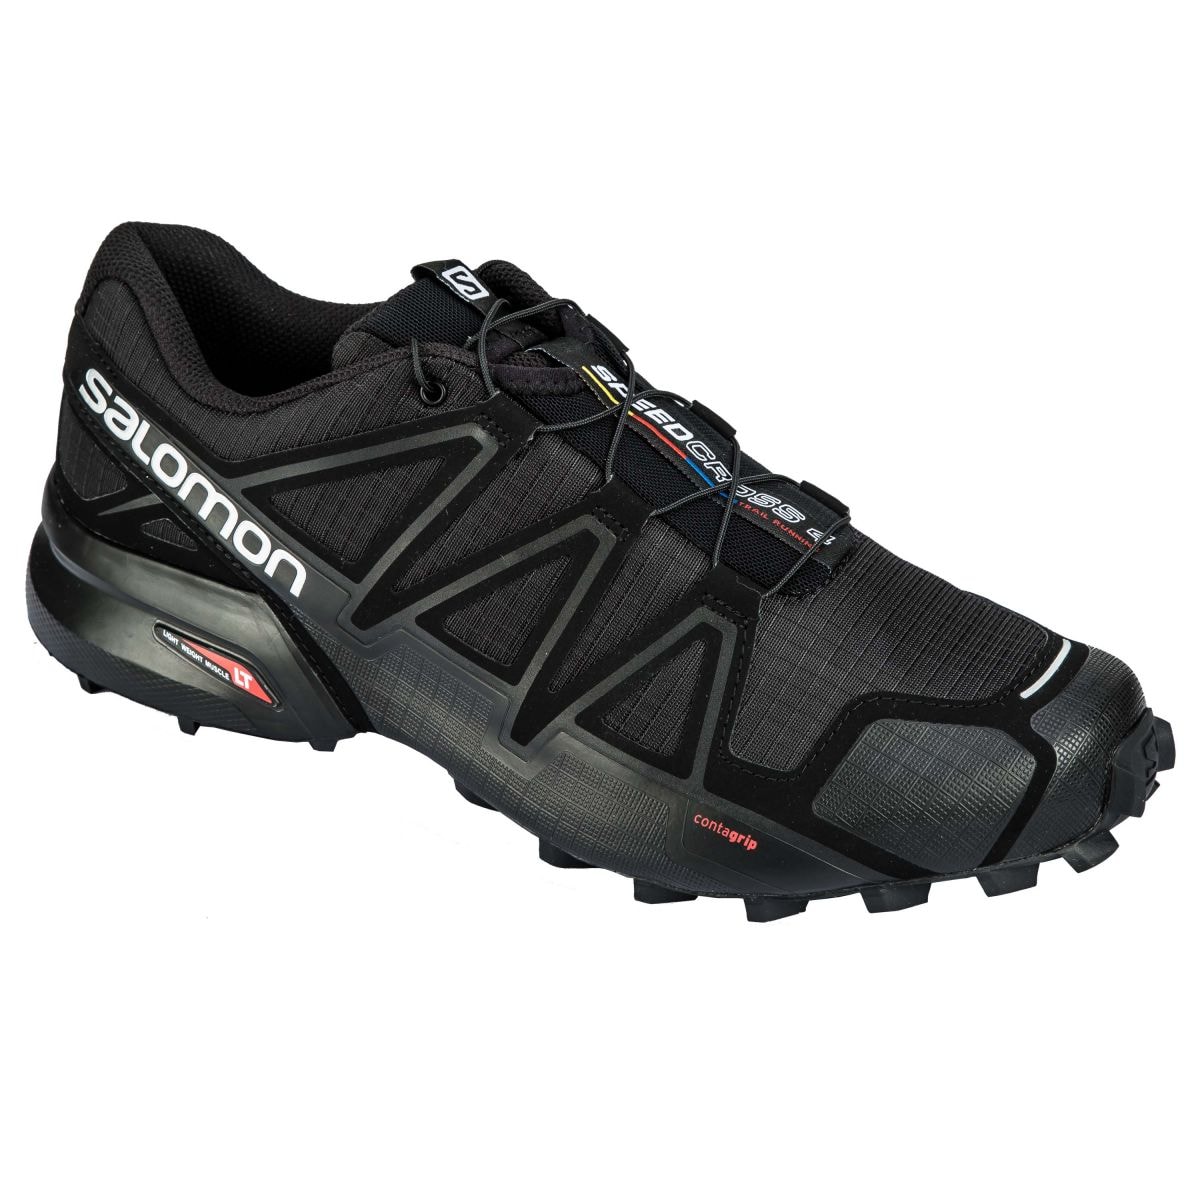 Salomon Shoes Speedcross 4 Wide black metallic